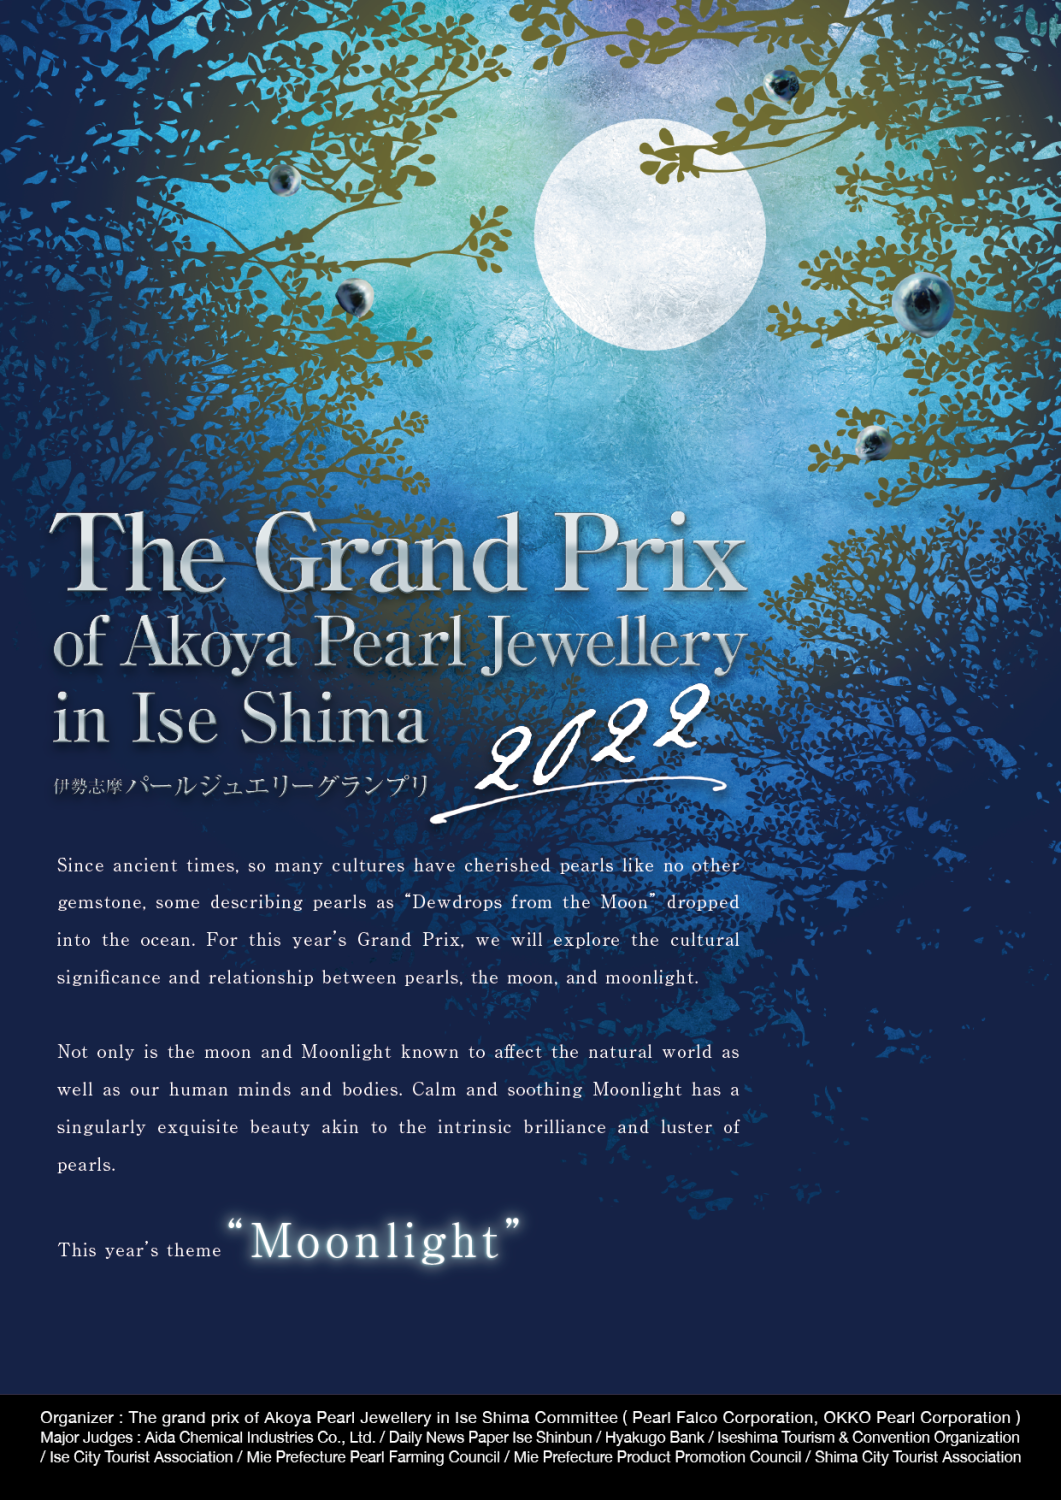 Ise-Shima Pearl Jewelry Grand Prix 2022 ☆ Start!